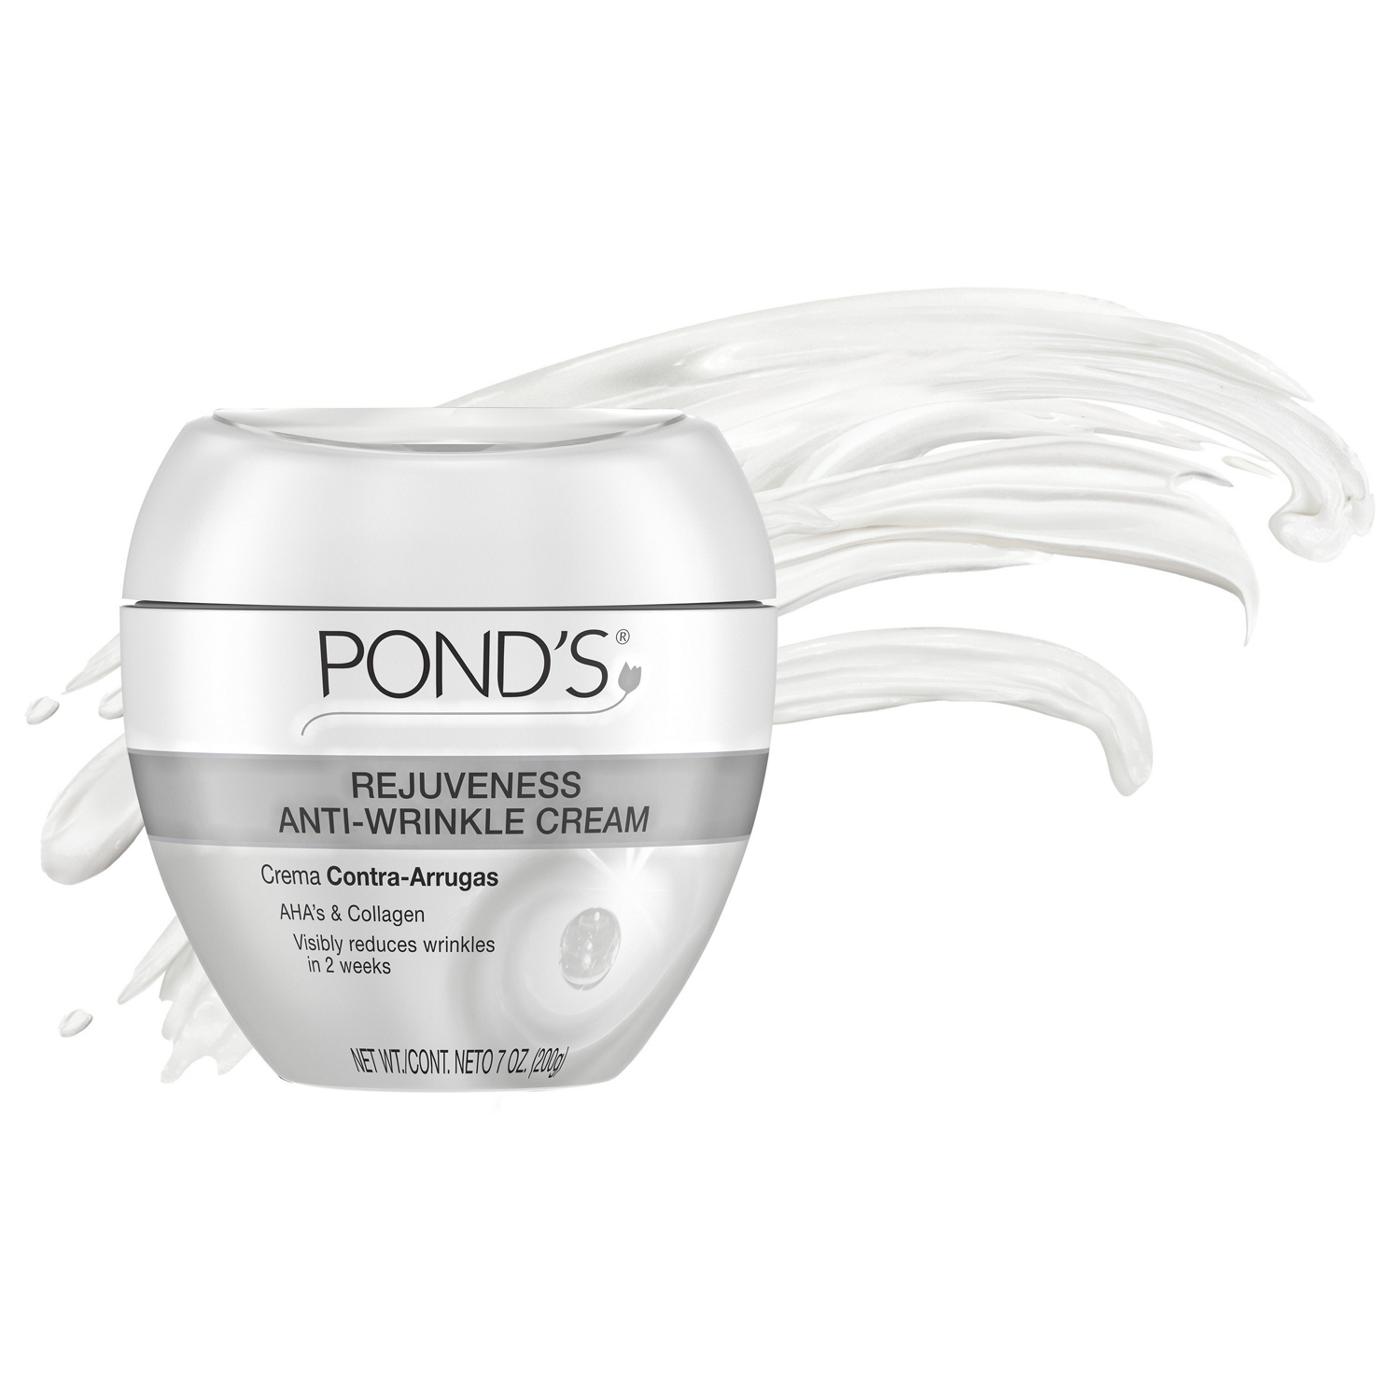 Pond's Rejuveness Anti-Wrinkle Cream; image 4 of 4